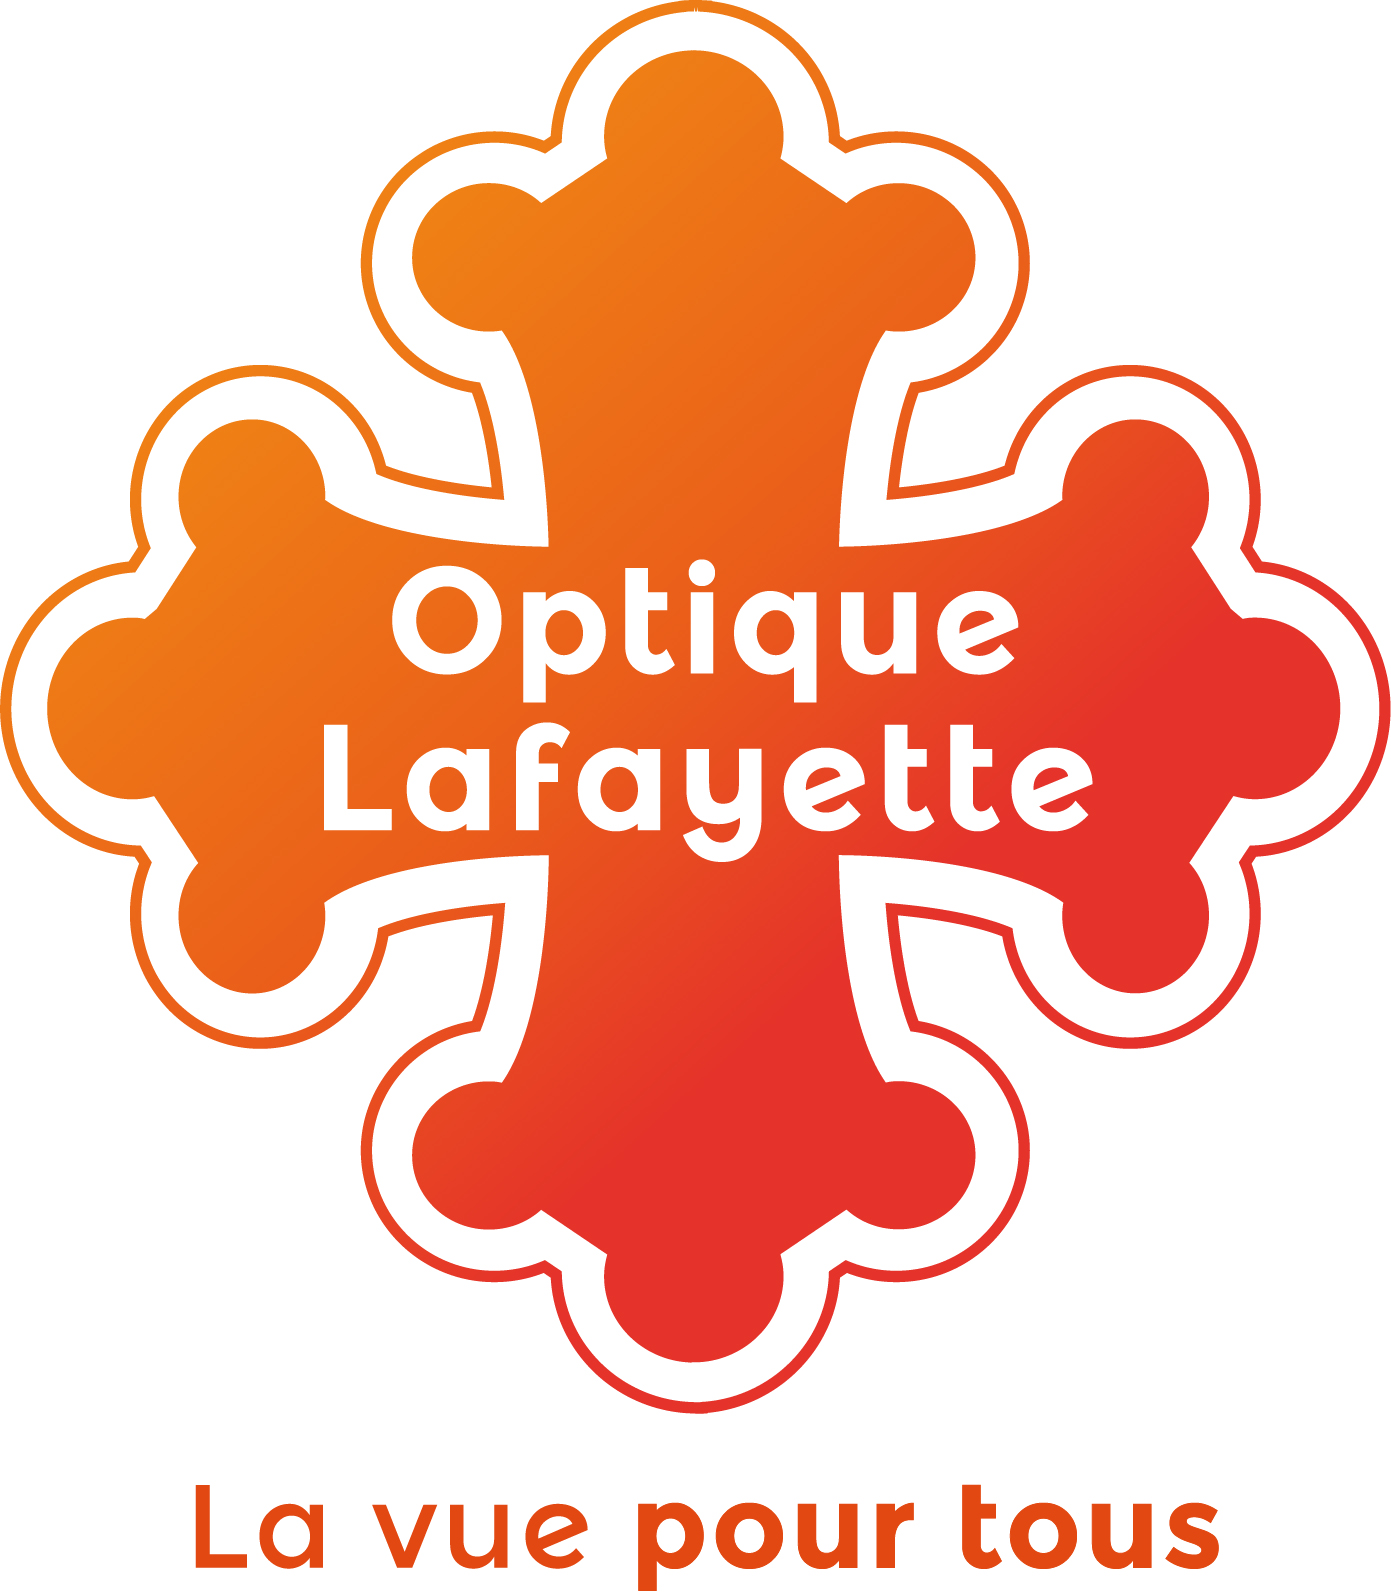 Optique Lafayette Brioude